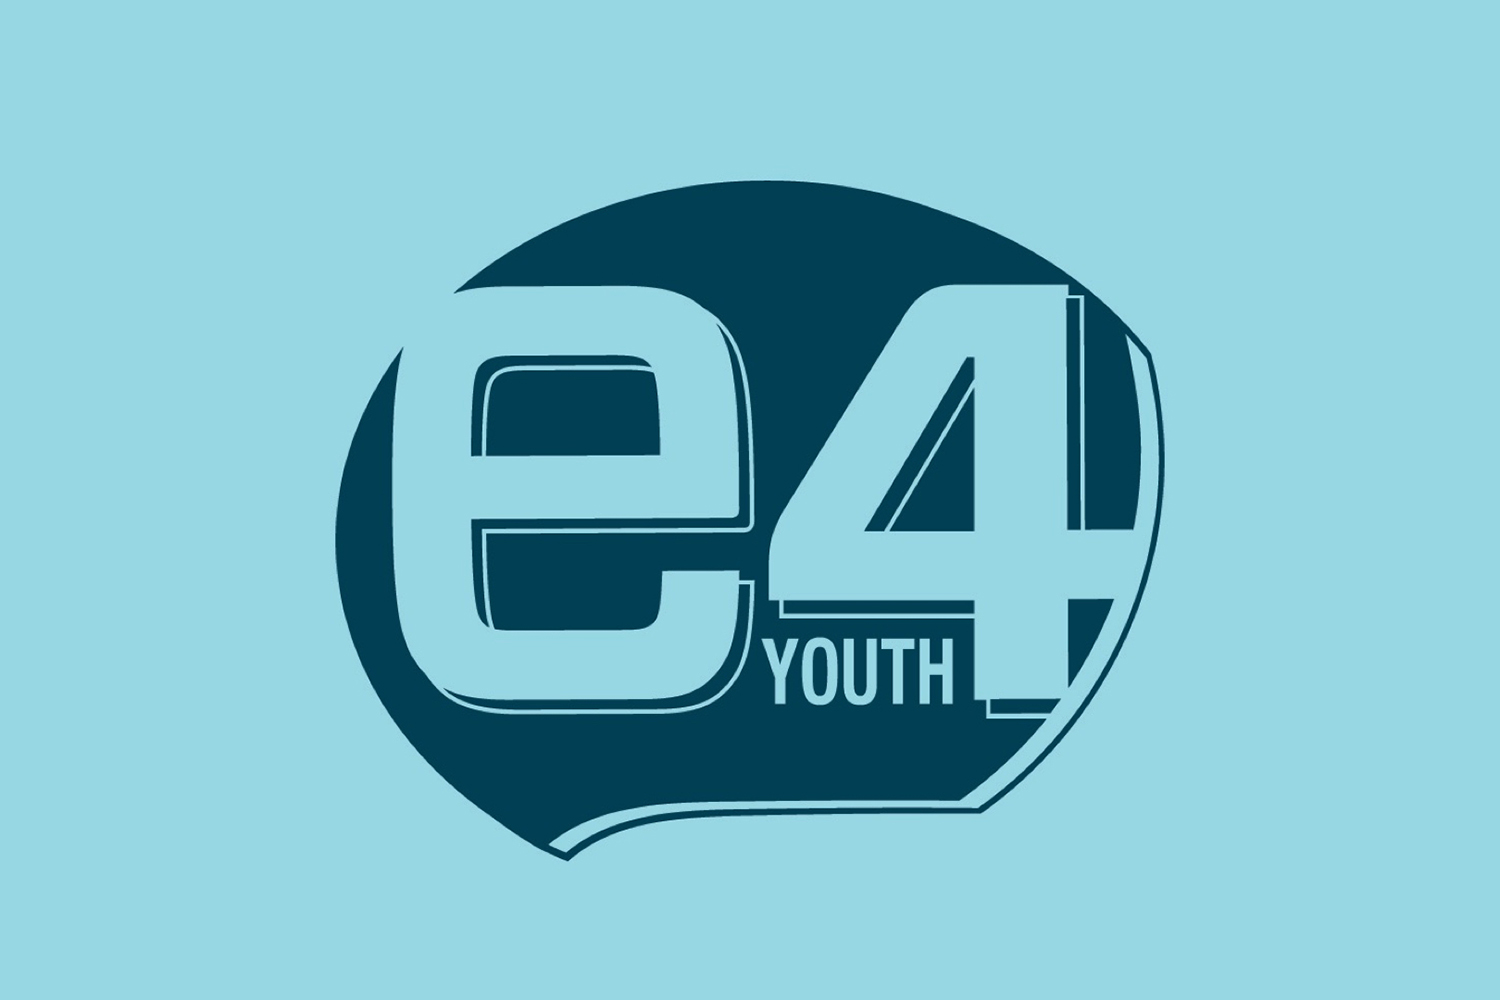 Home - E4 Youth